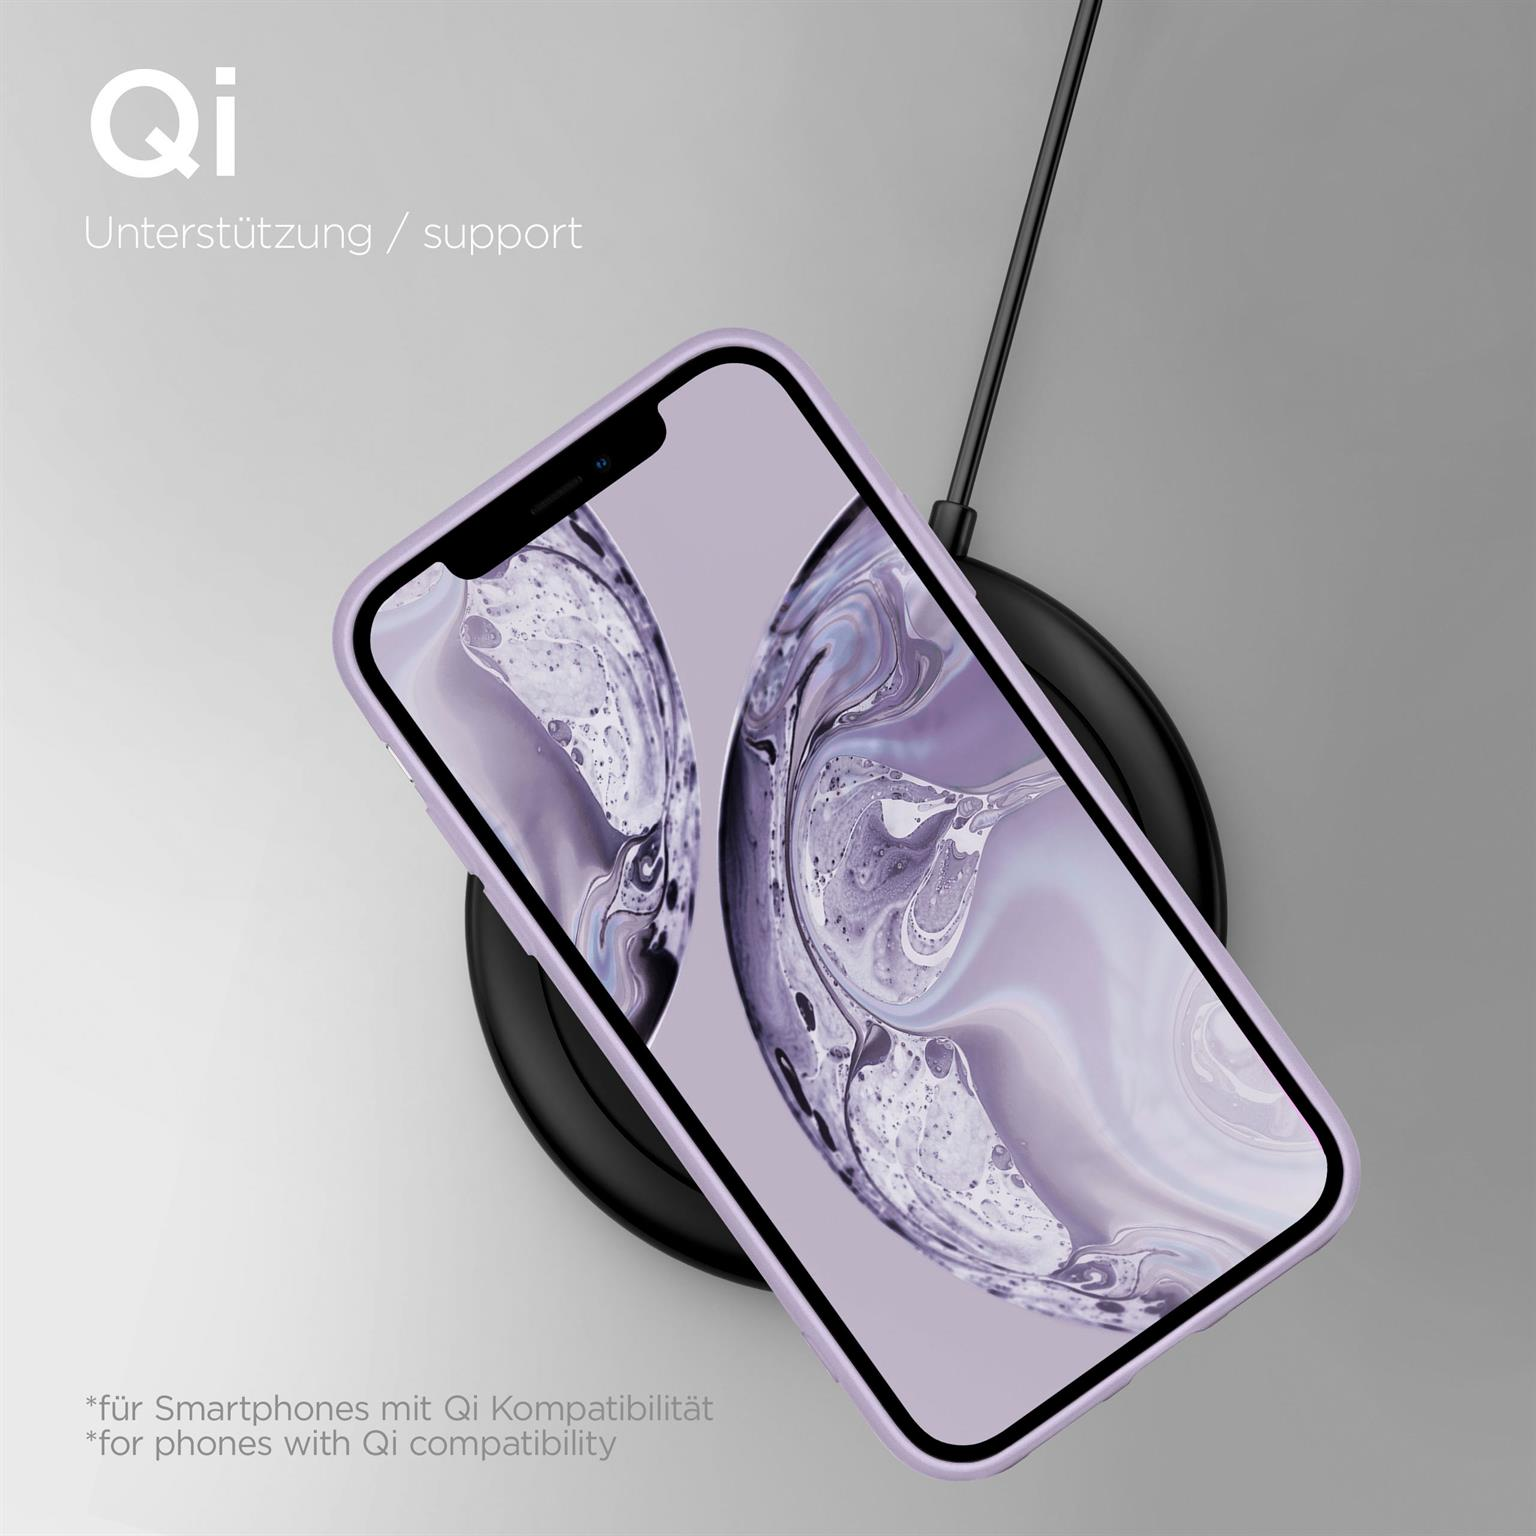 ONEFLOW Soft Case, iPhone Flieder 12, Apple, Backcover